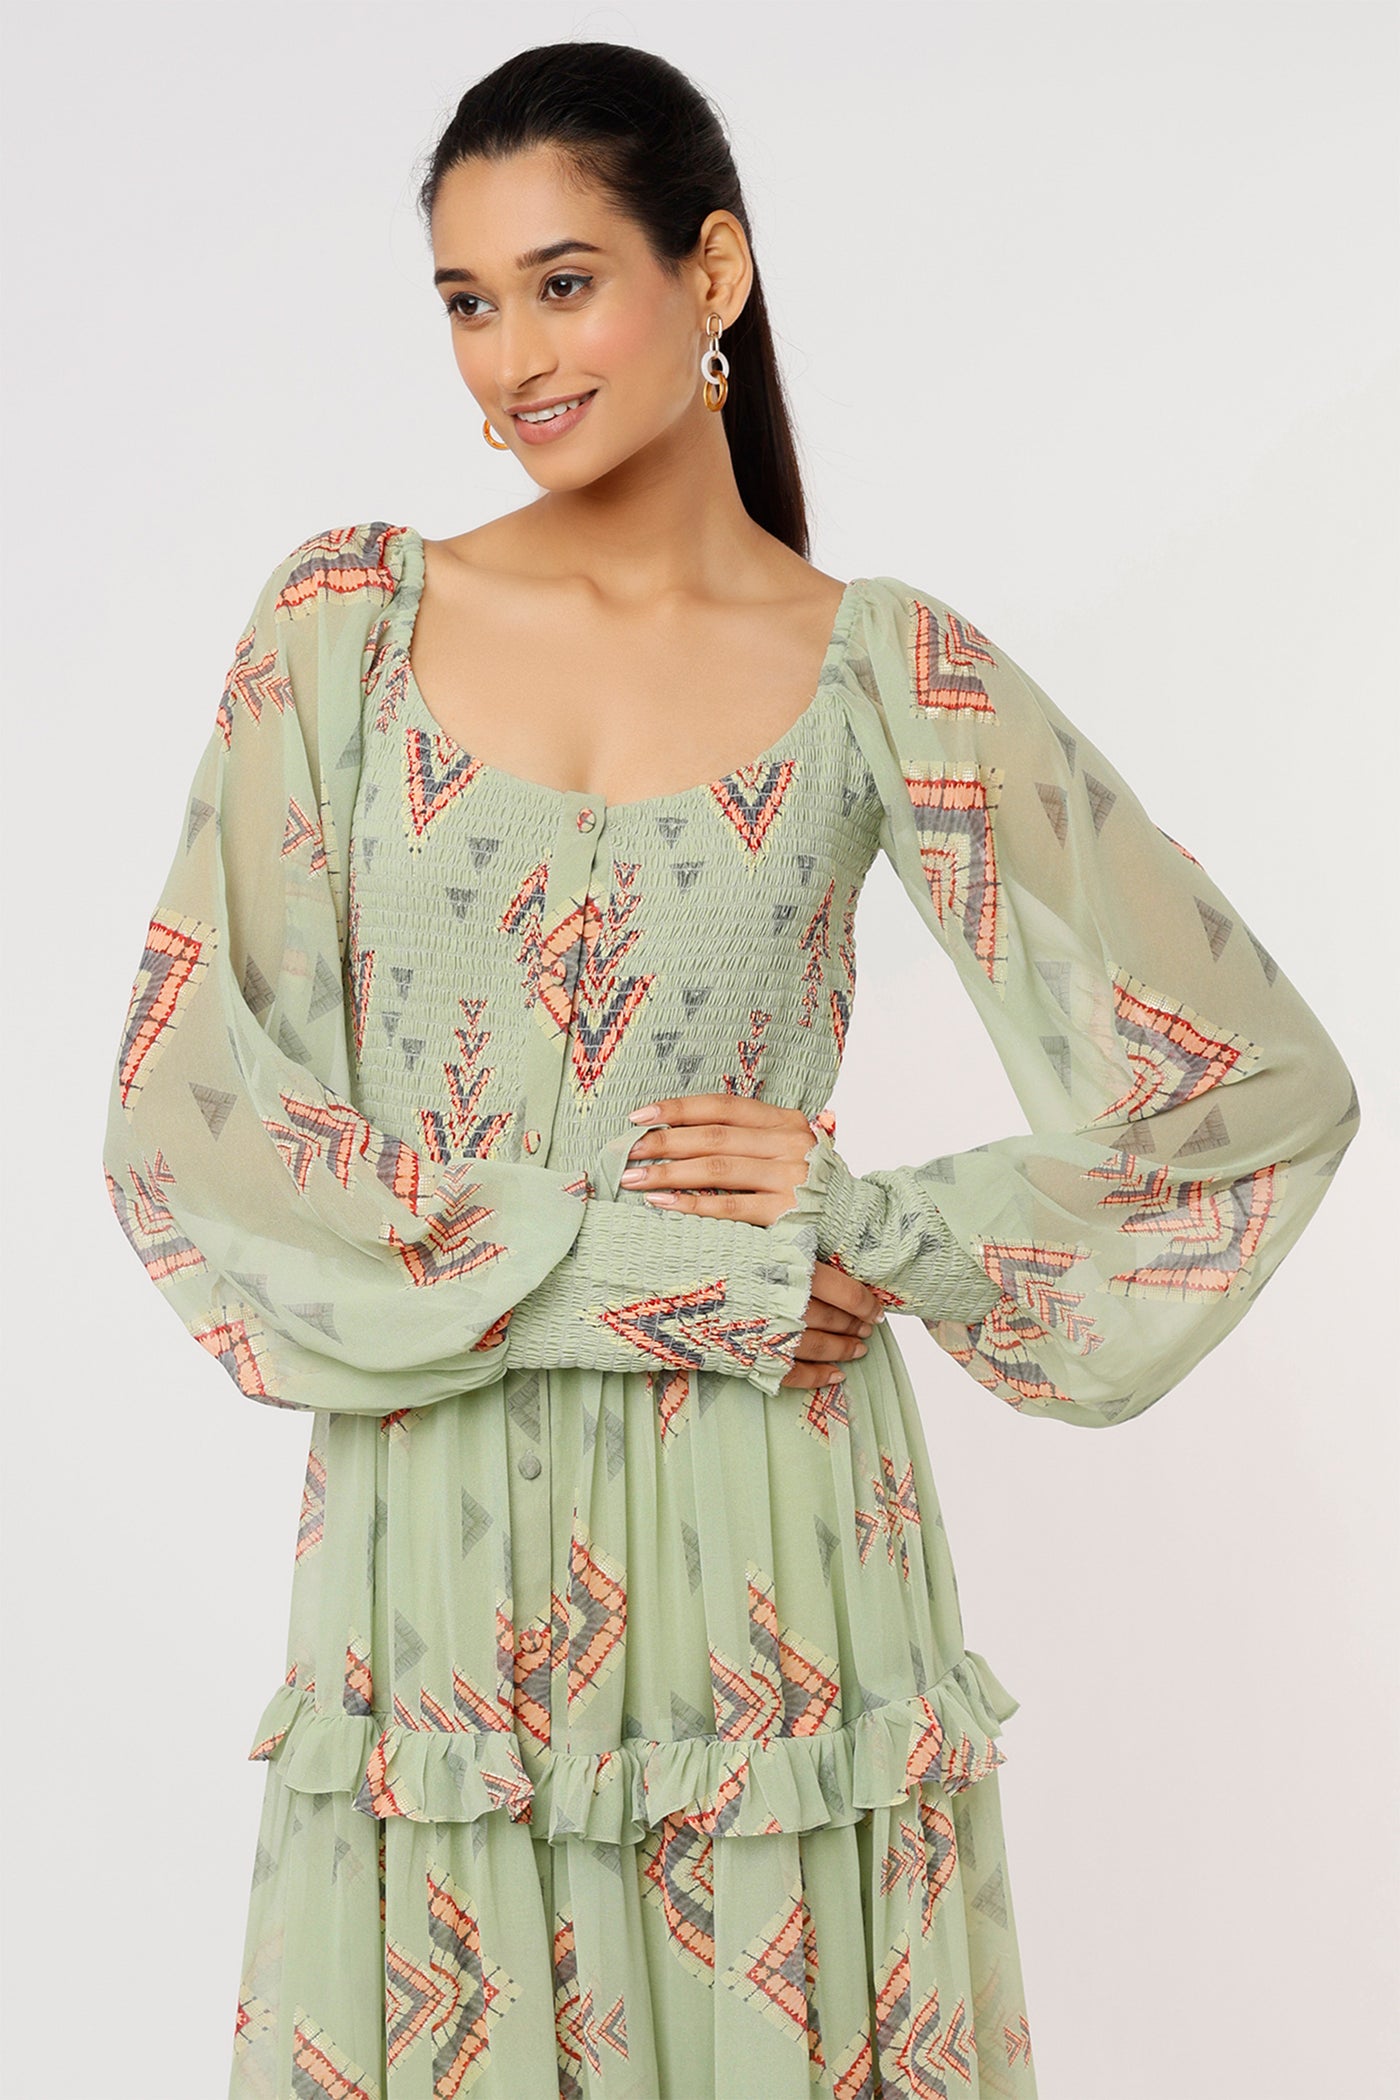 Gopi vaid Talia Shirred Dress mint green festive Indian designer wear online shopping melange singapore